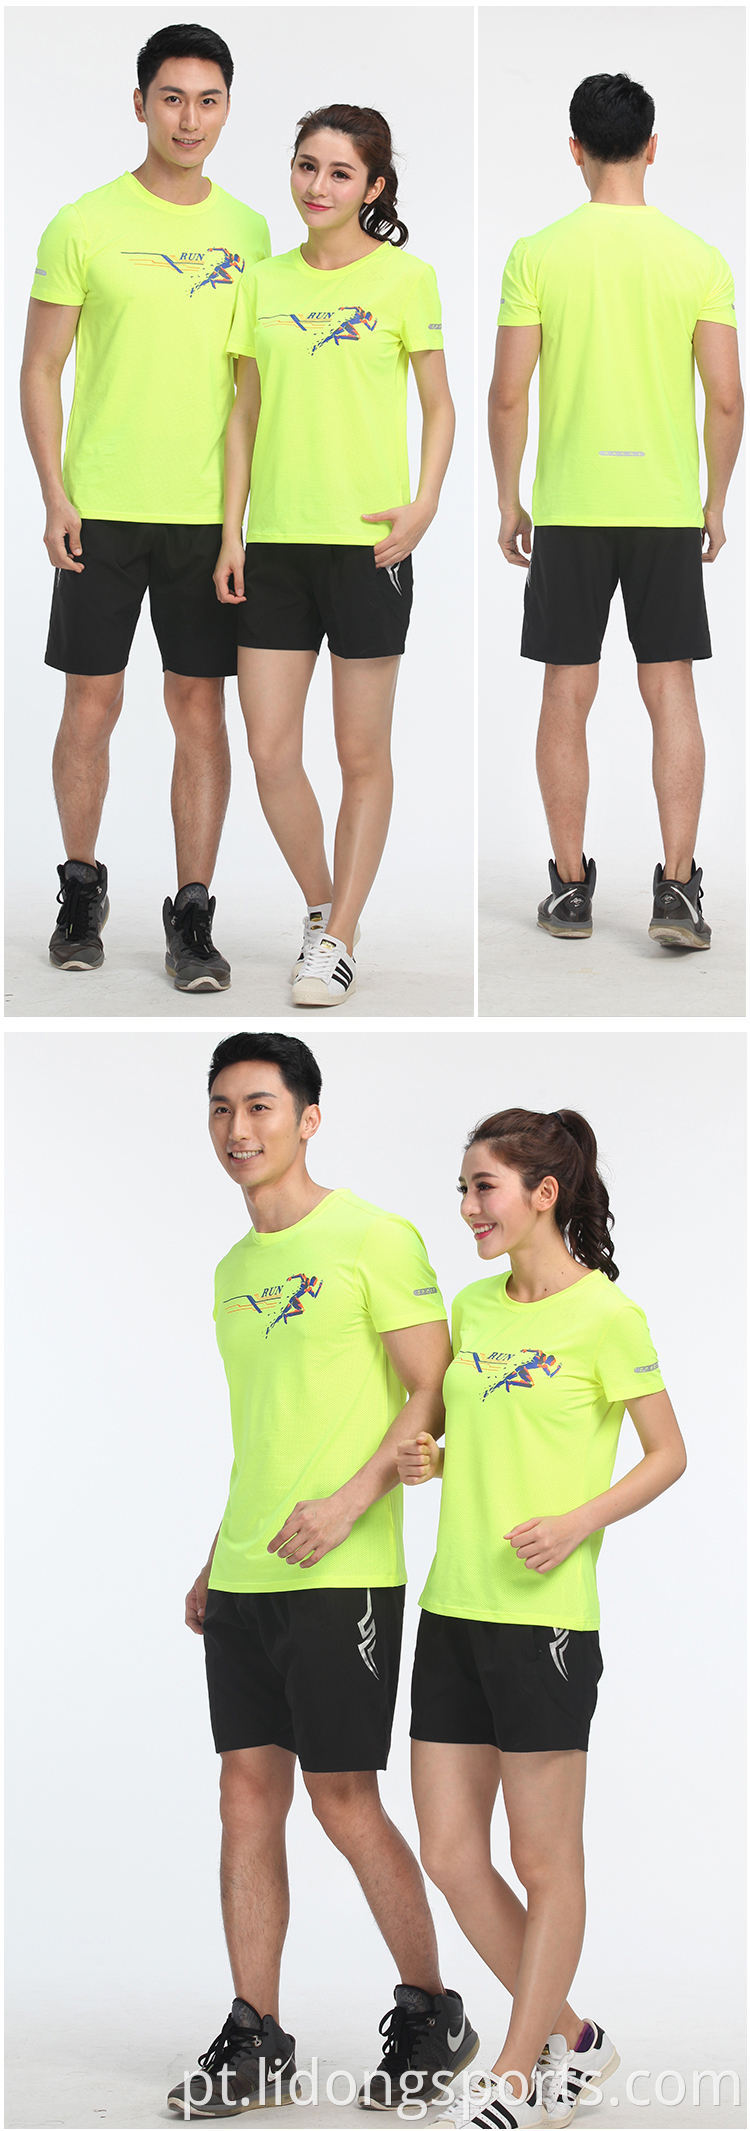 Atacado Fit Outdoor Jogging Running T Shirt Esporte T-Shirt / Men's Sportswear Camiseta